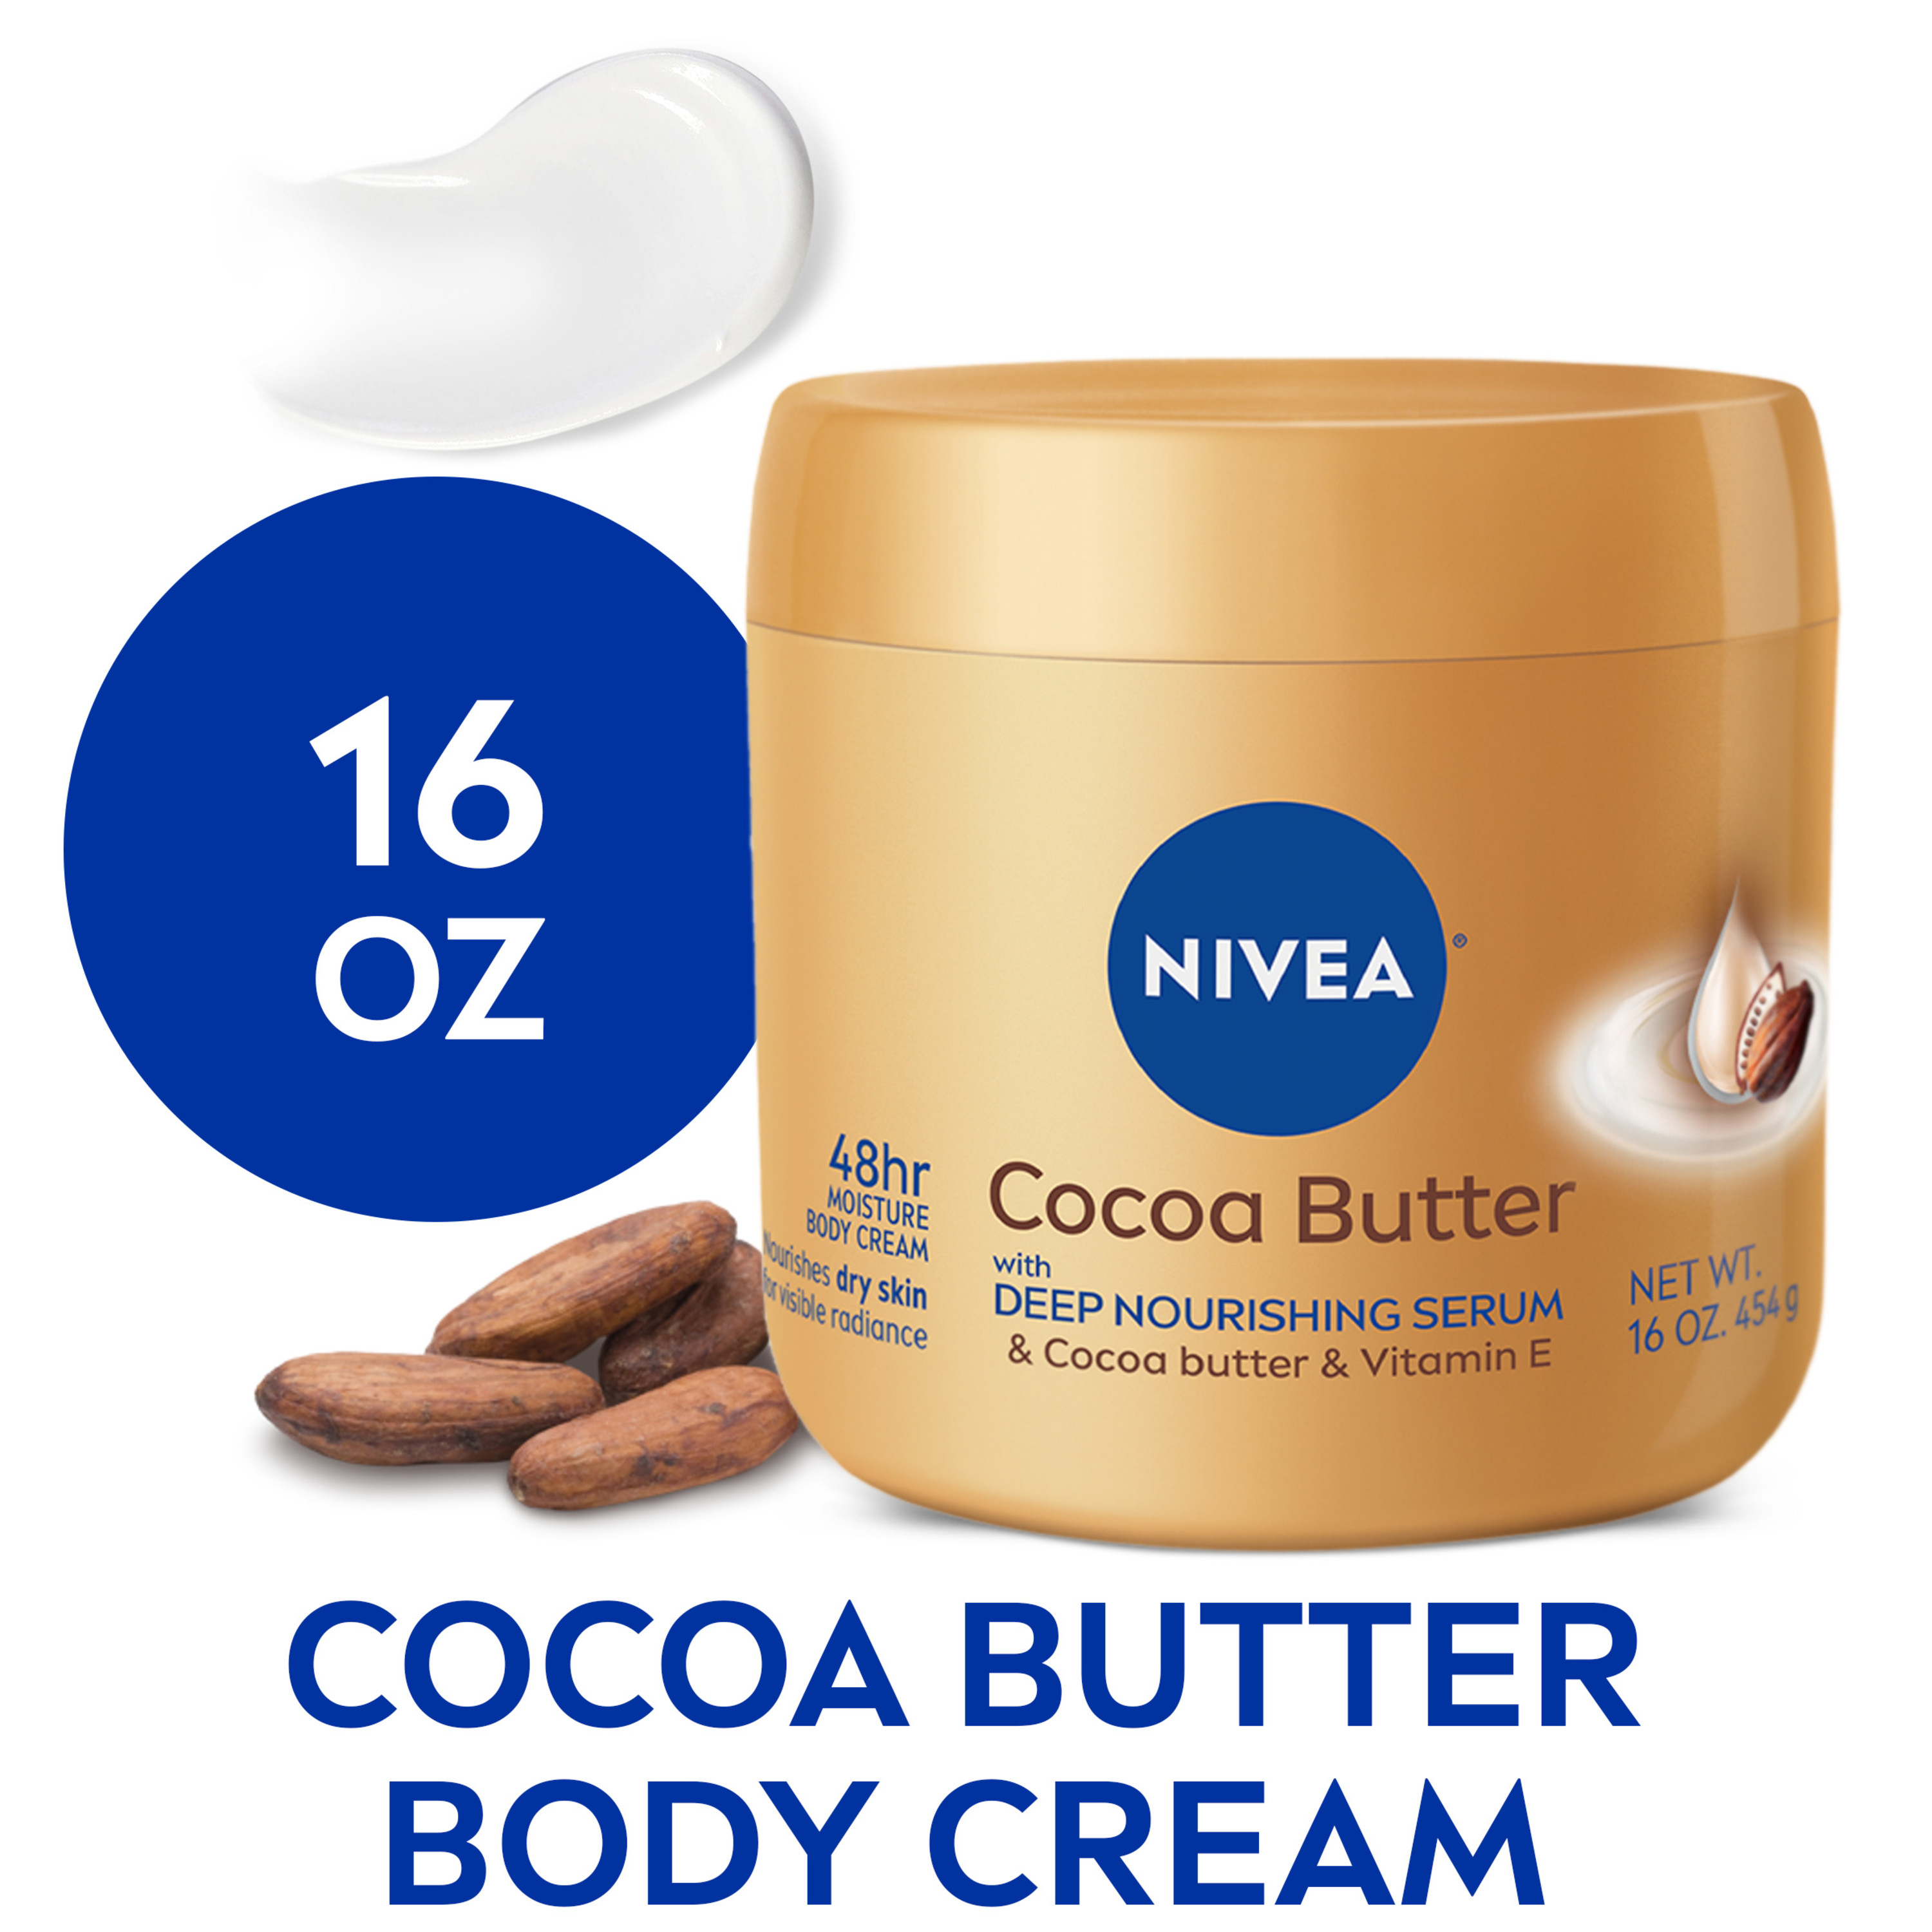 NIVEA Cocoa Butter Body Cream with Deep Nourishing Serum, 16 Ounce - image 1 of 14